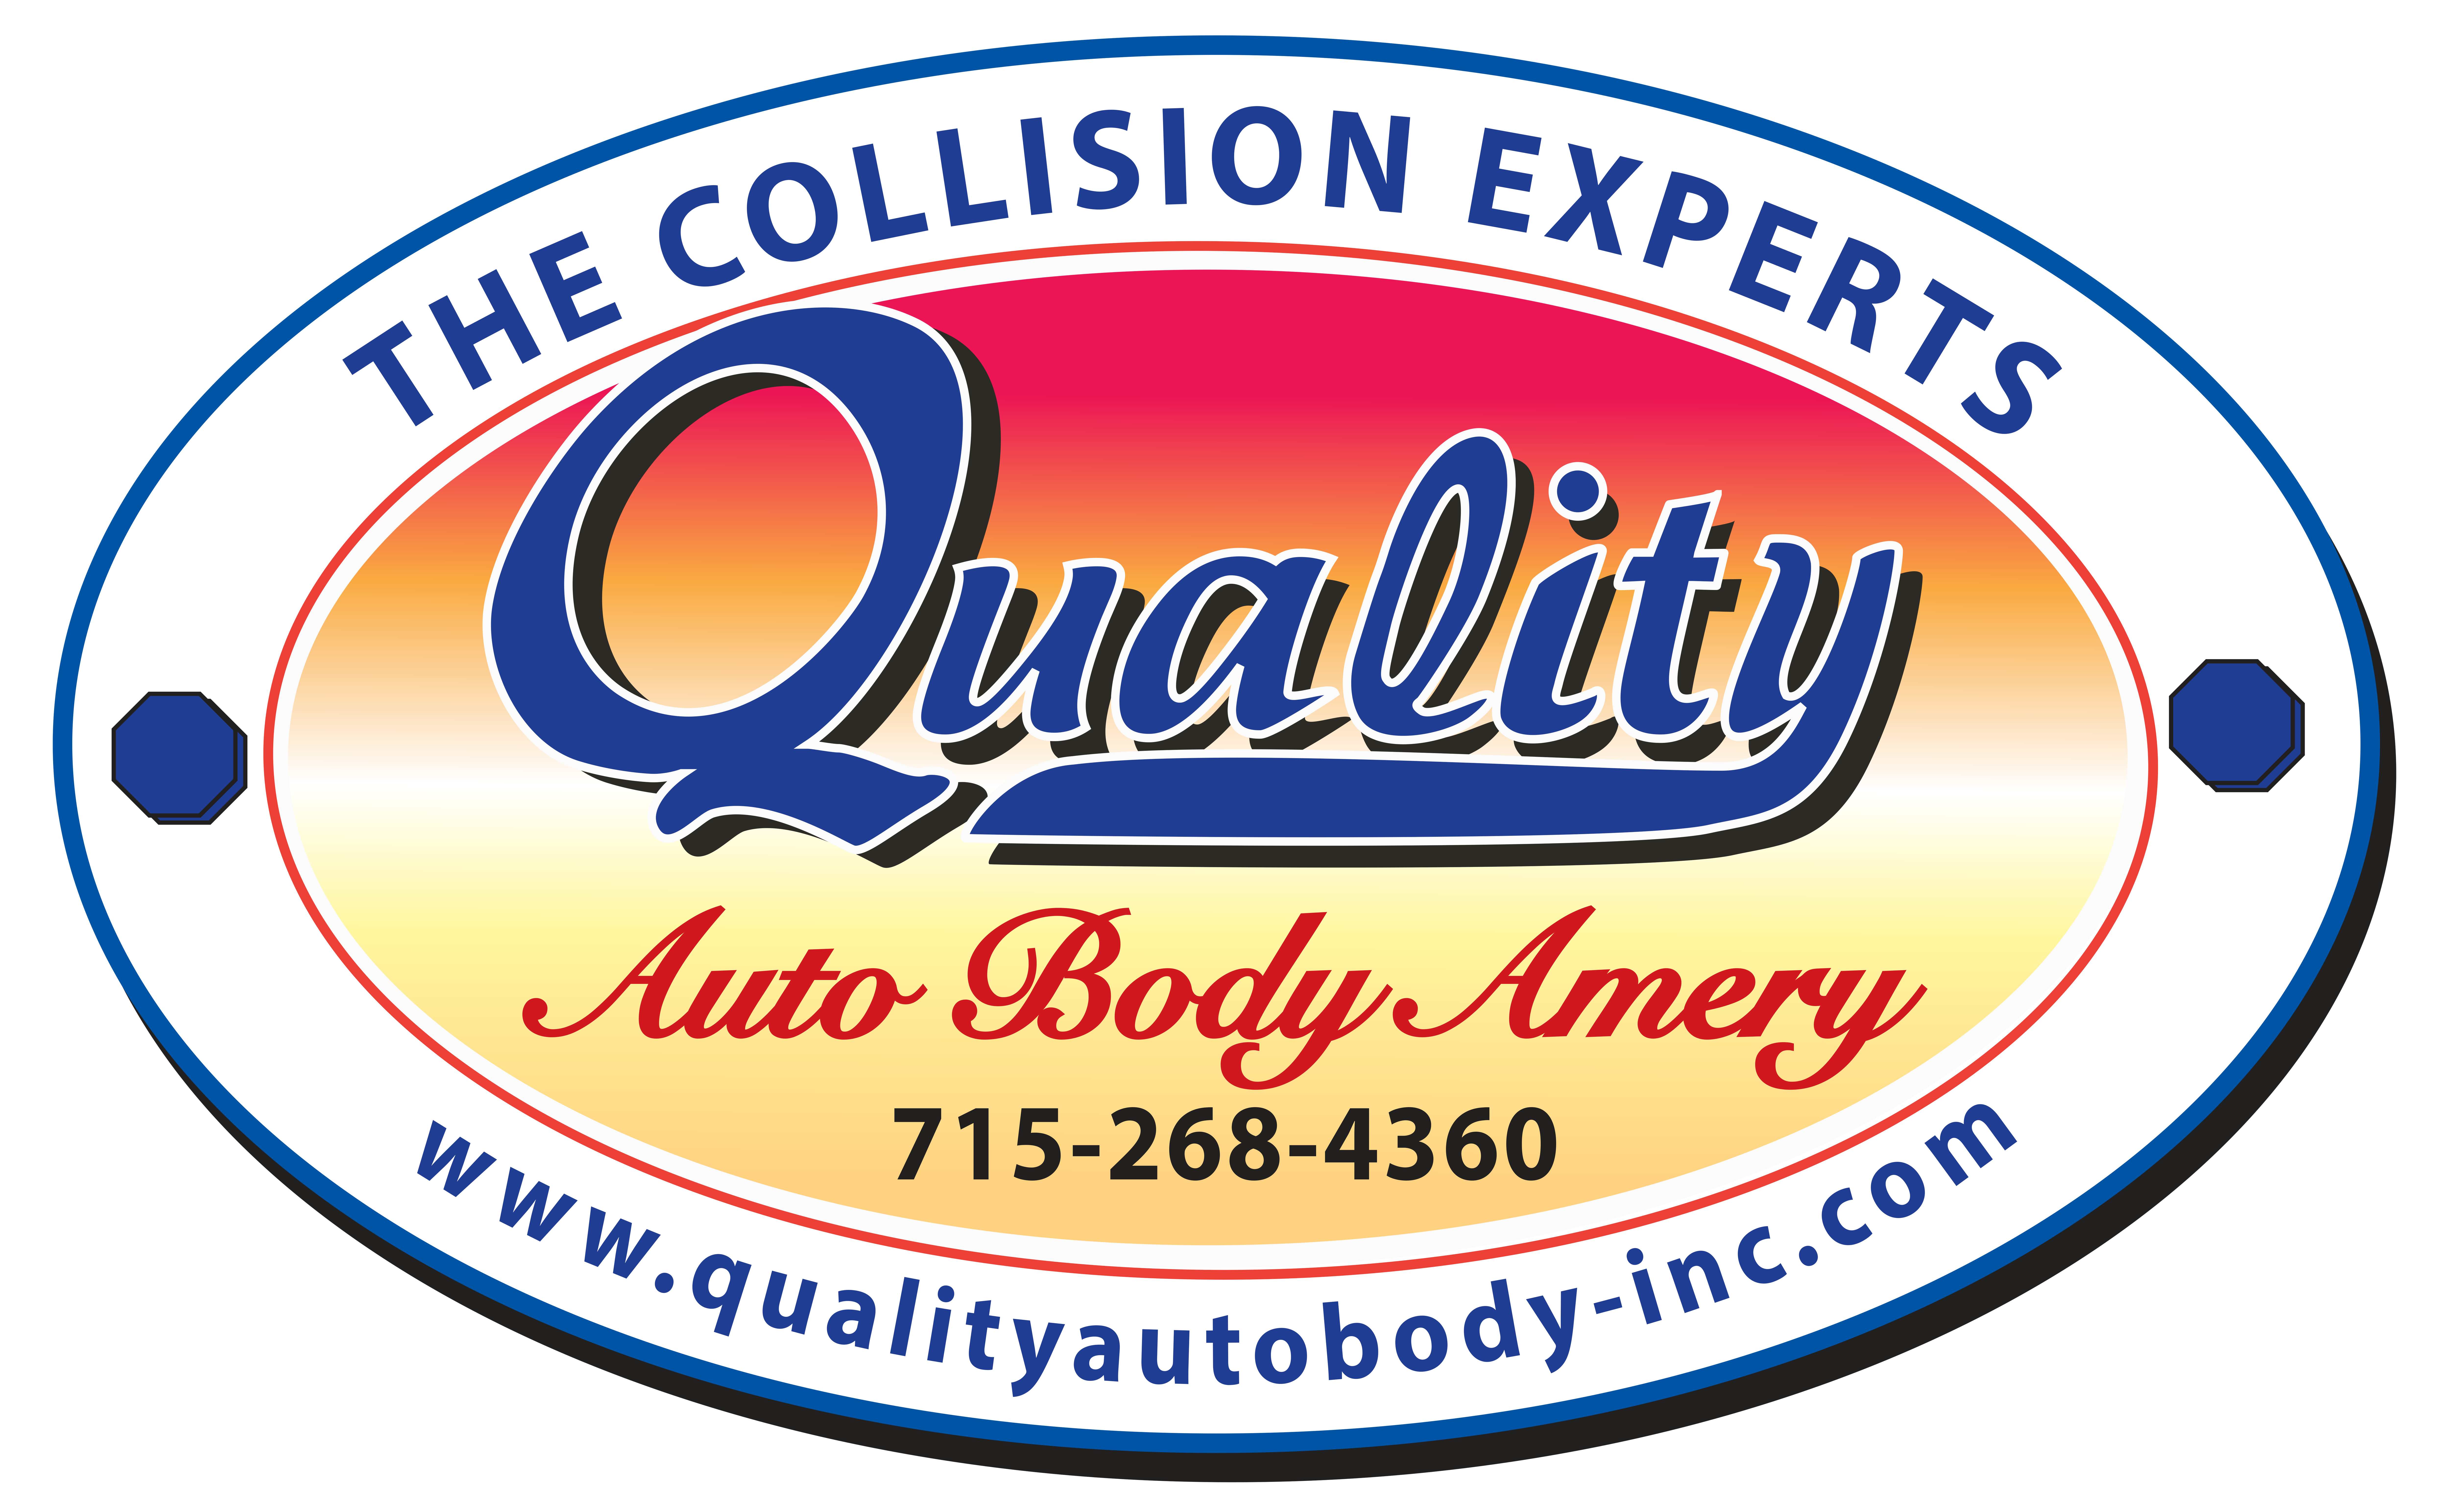 Quality Auto Body – Amery, LLC